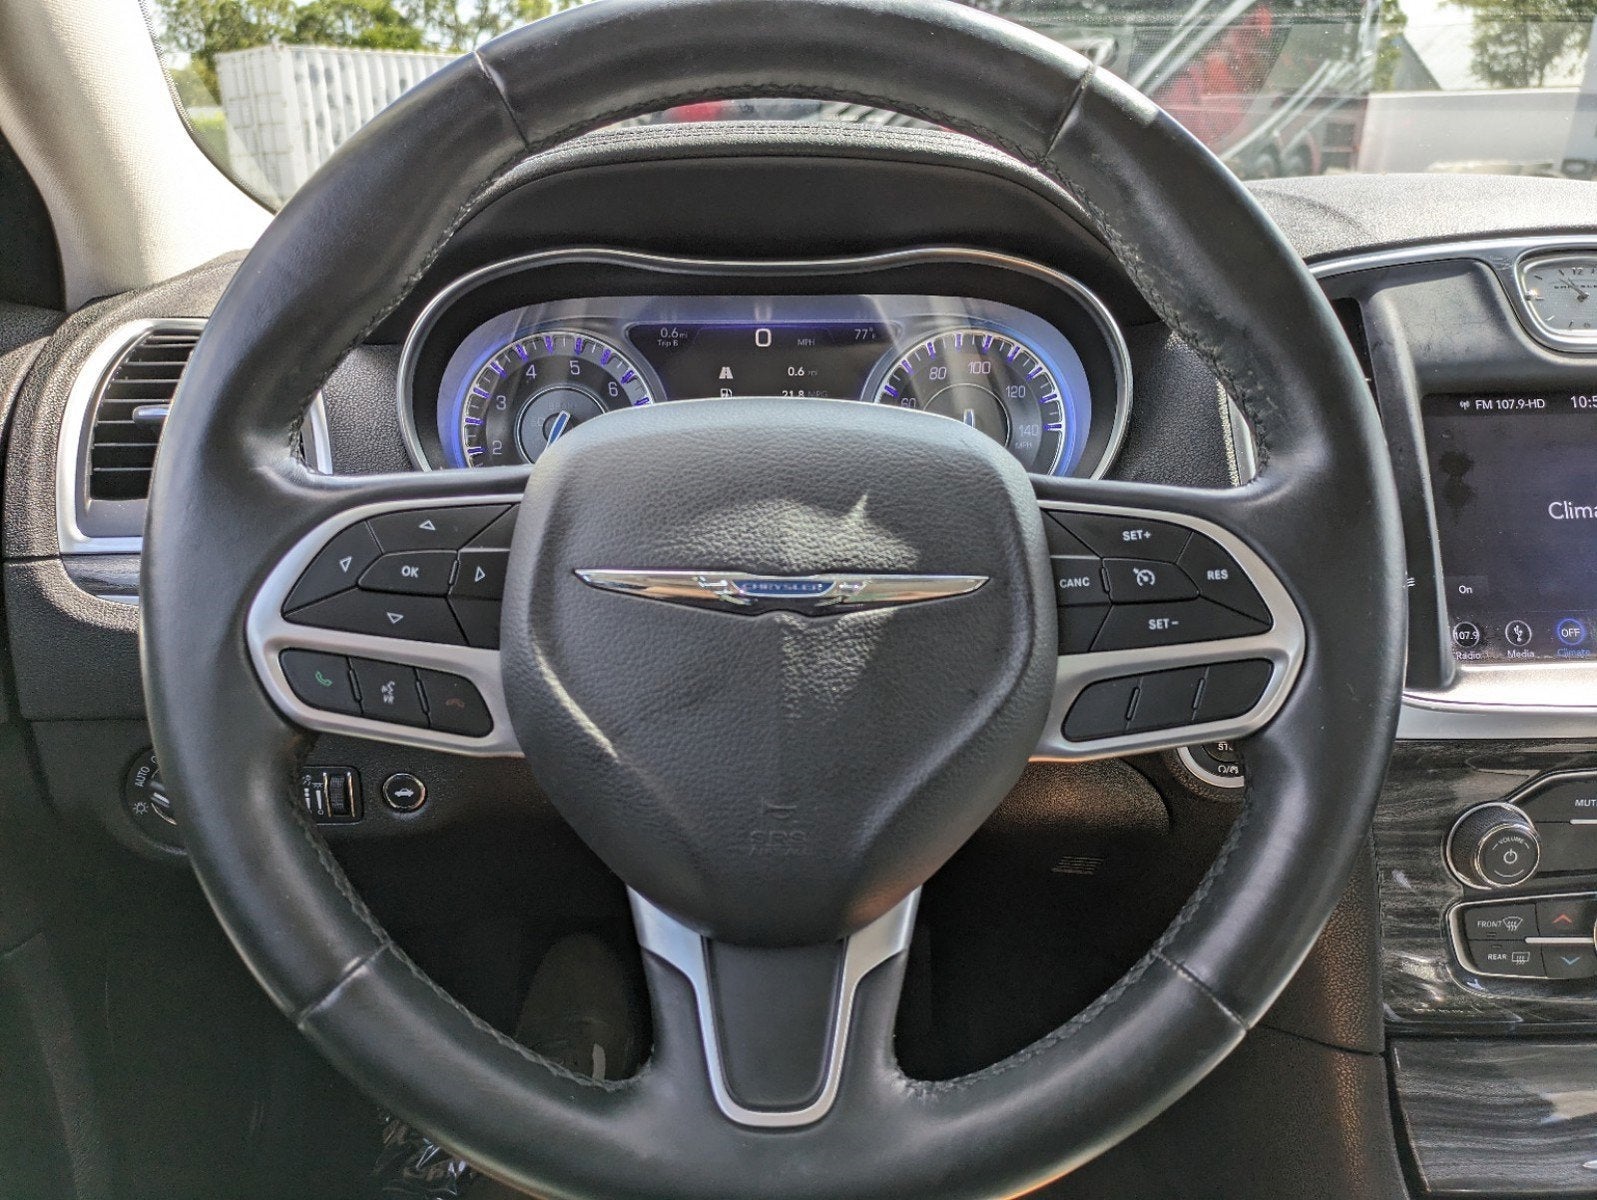 2018 Chrysler 300 Touring